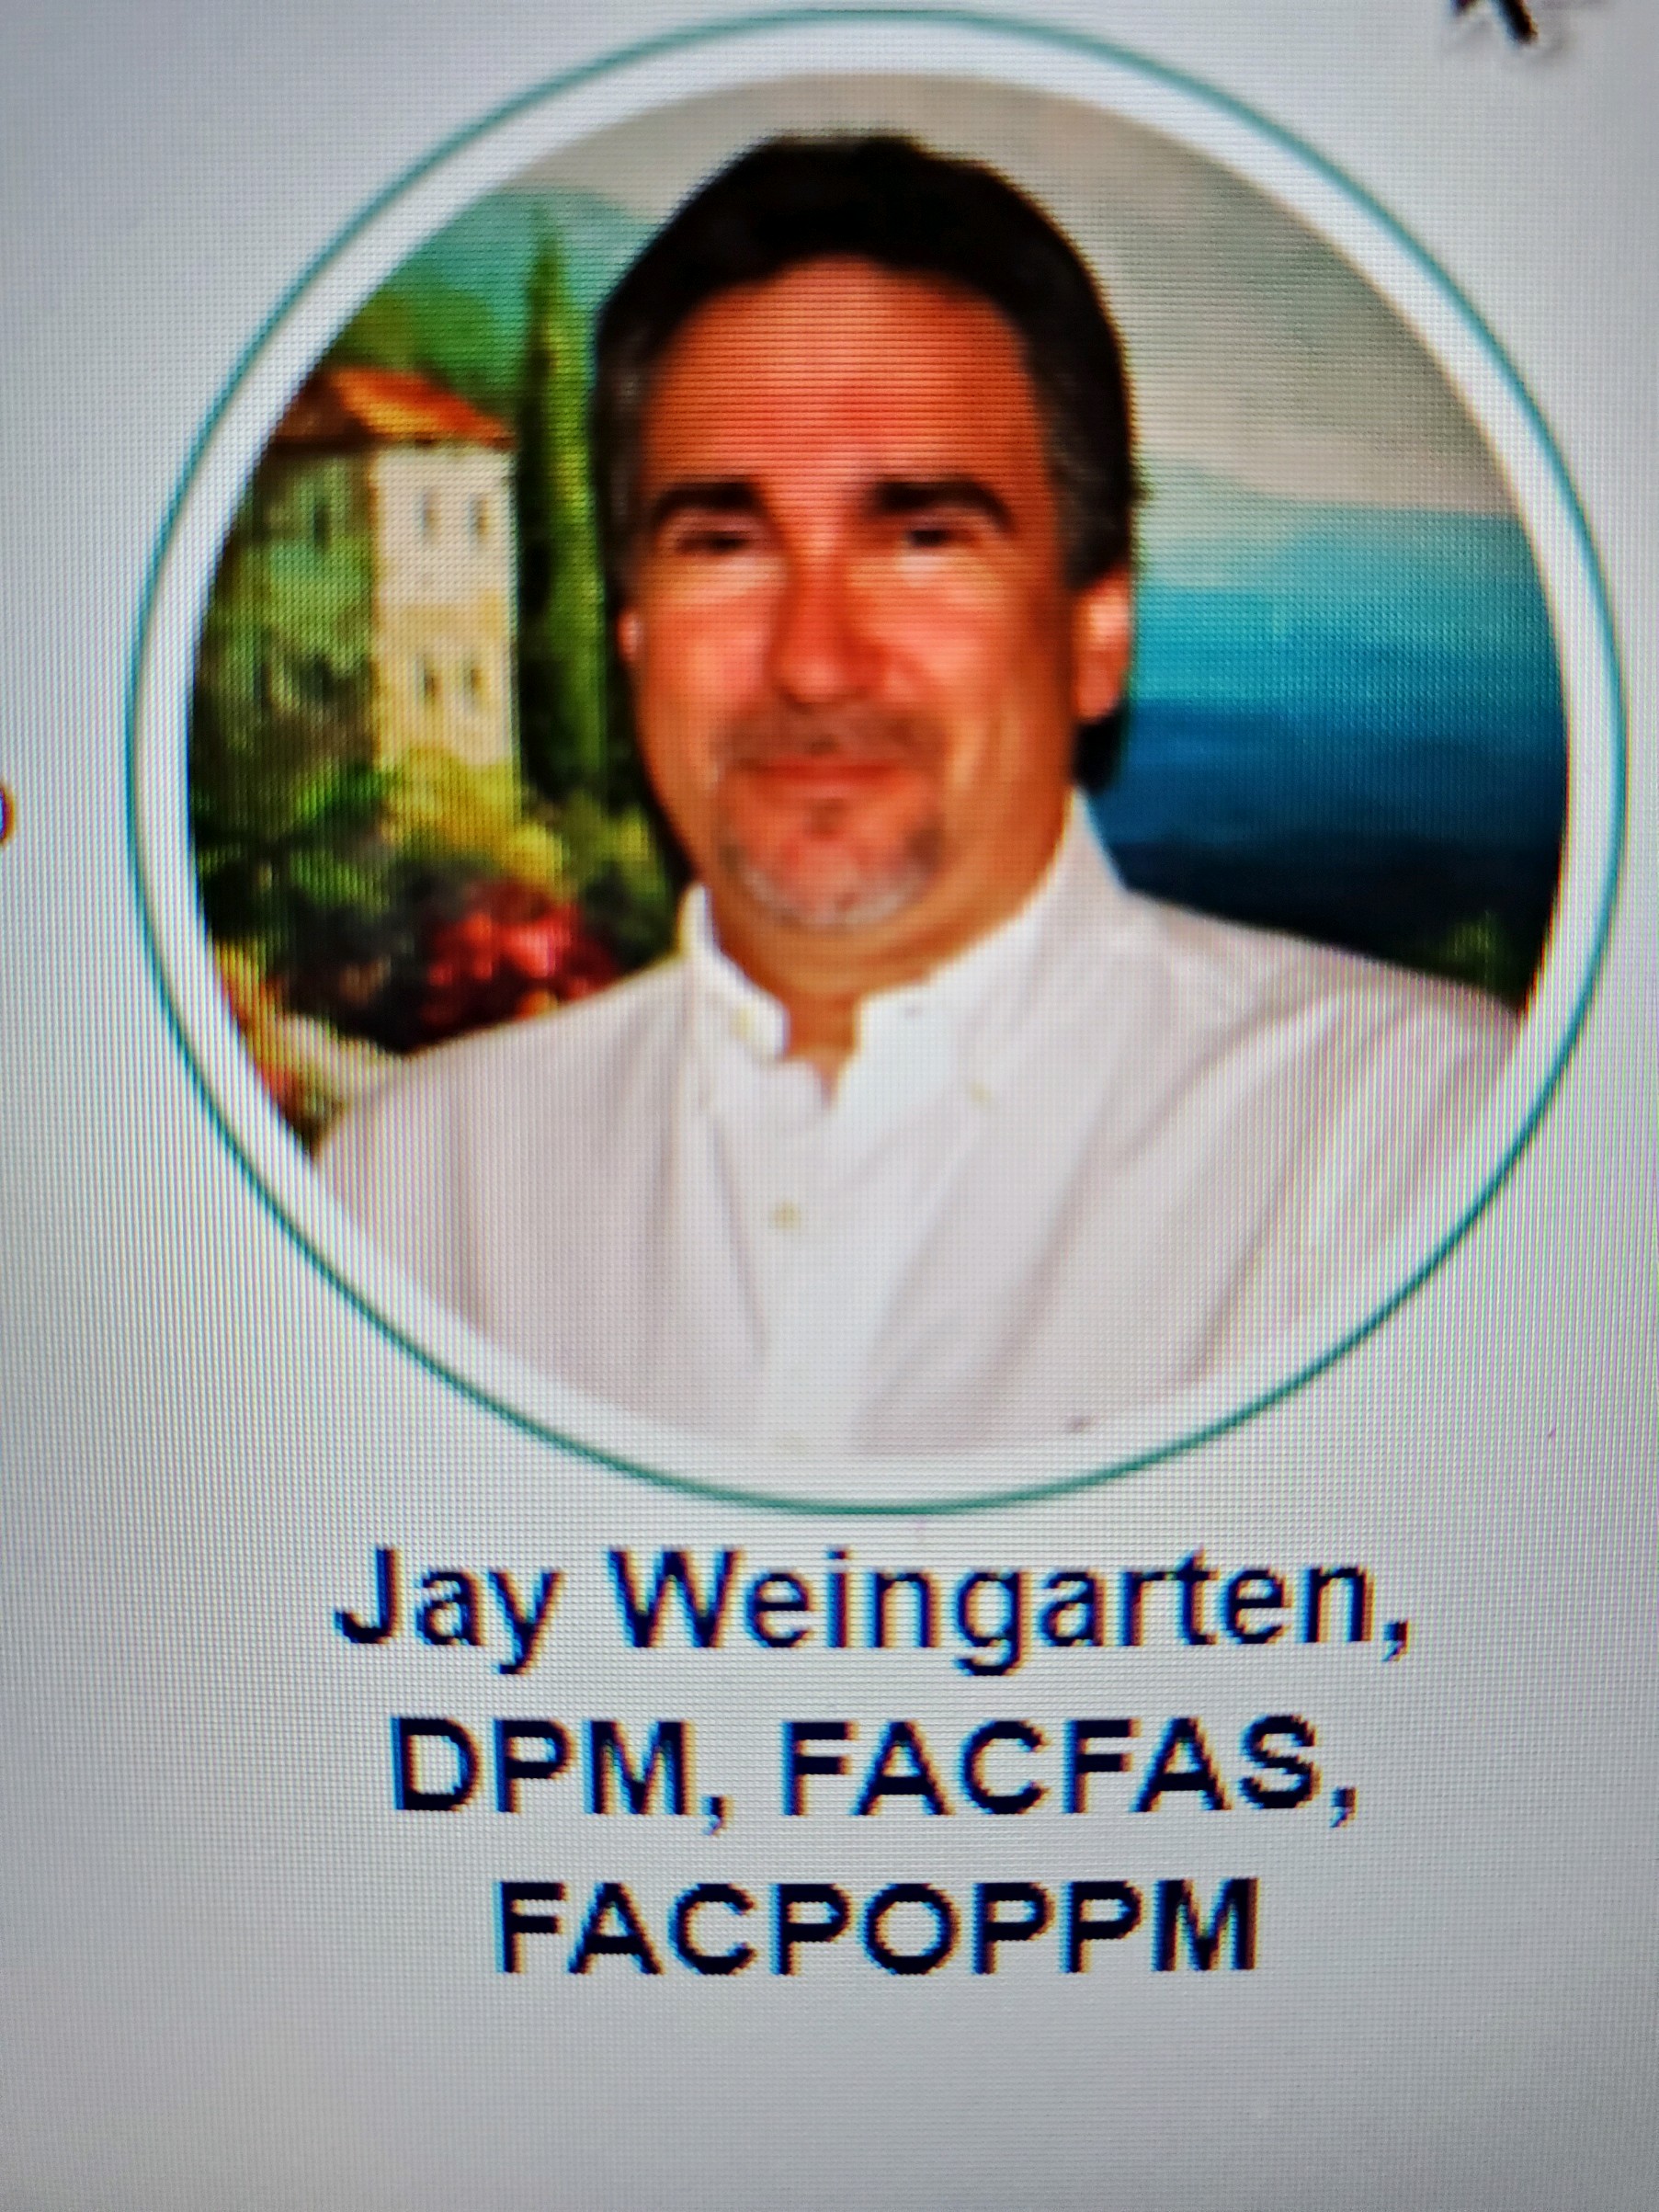 Dr. Jay S. Weingarten, DPM